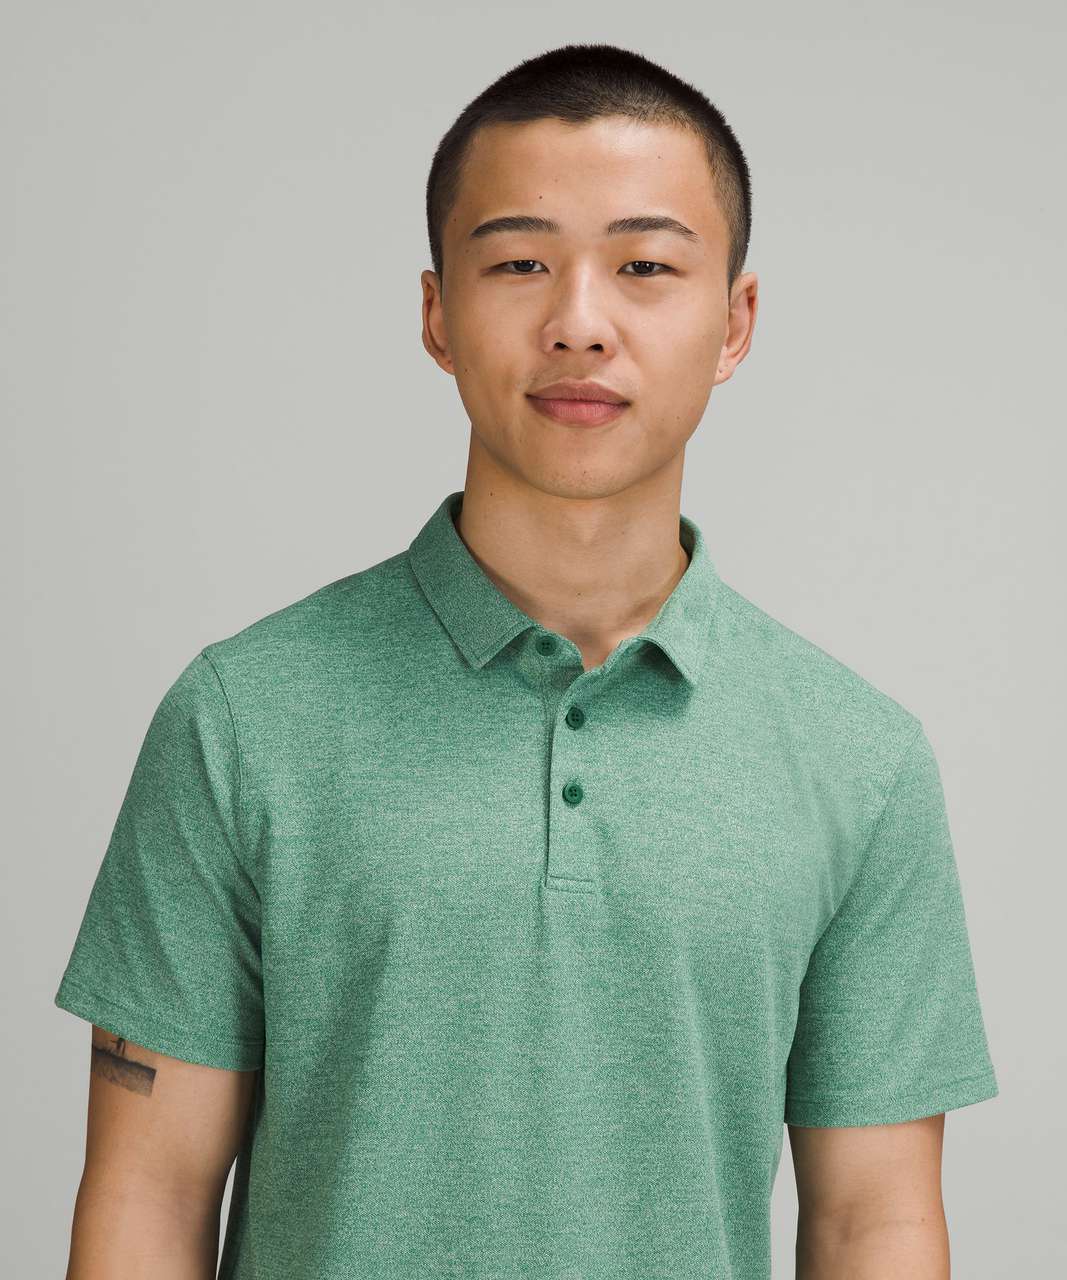 Lululemon Evolution Short Sleeve Polo Shirt *Pique Fabric - Heathered Everglade Green